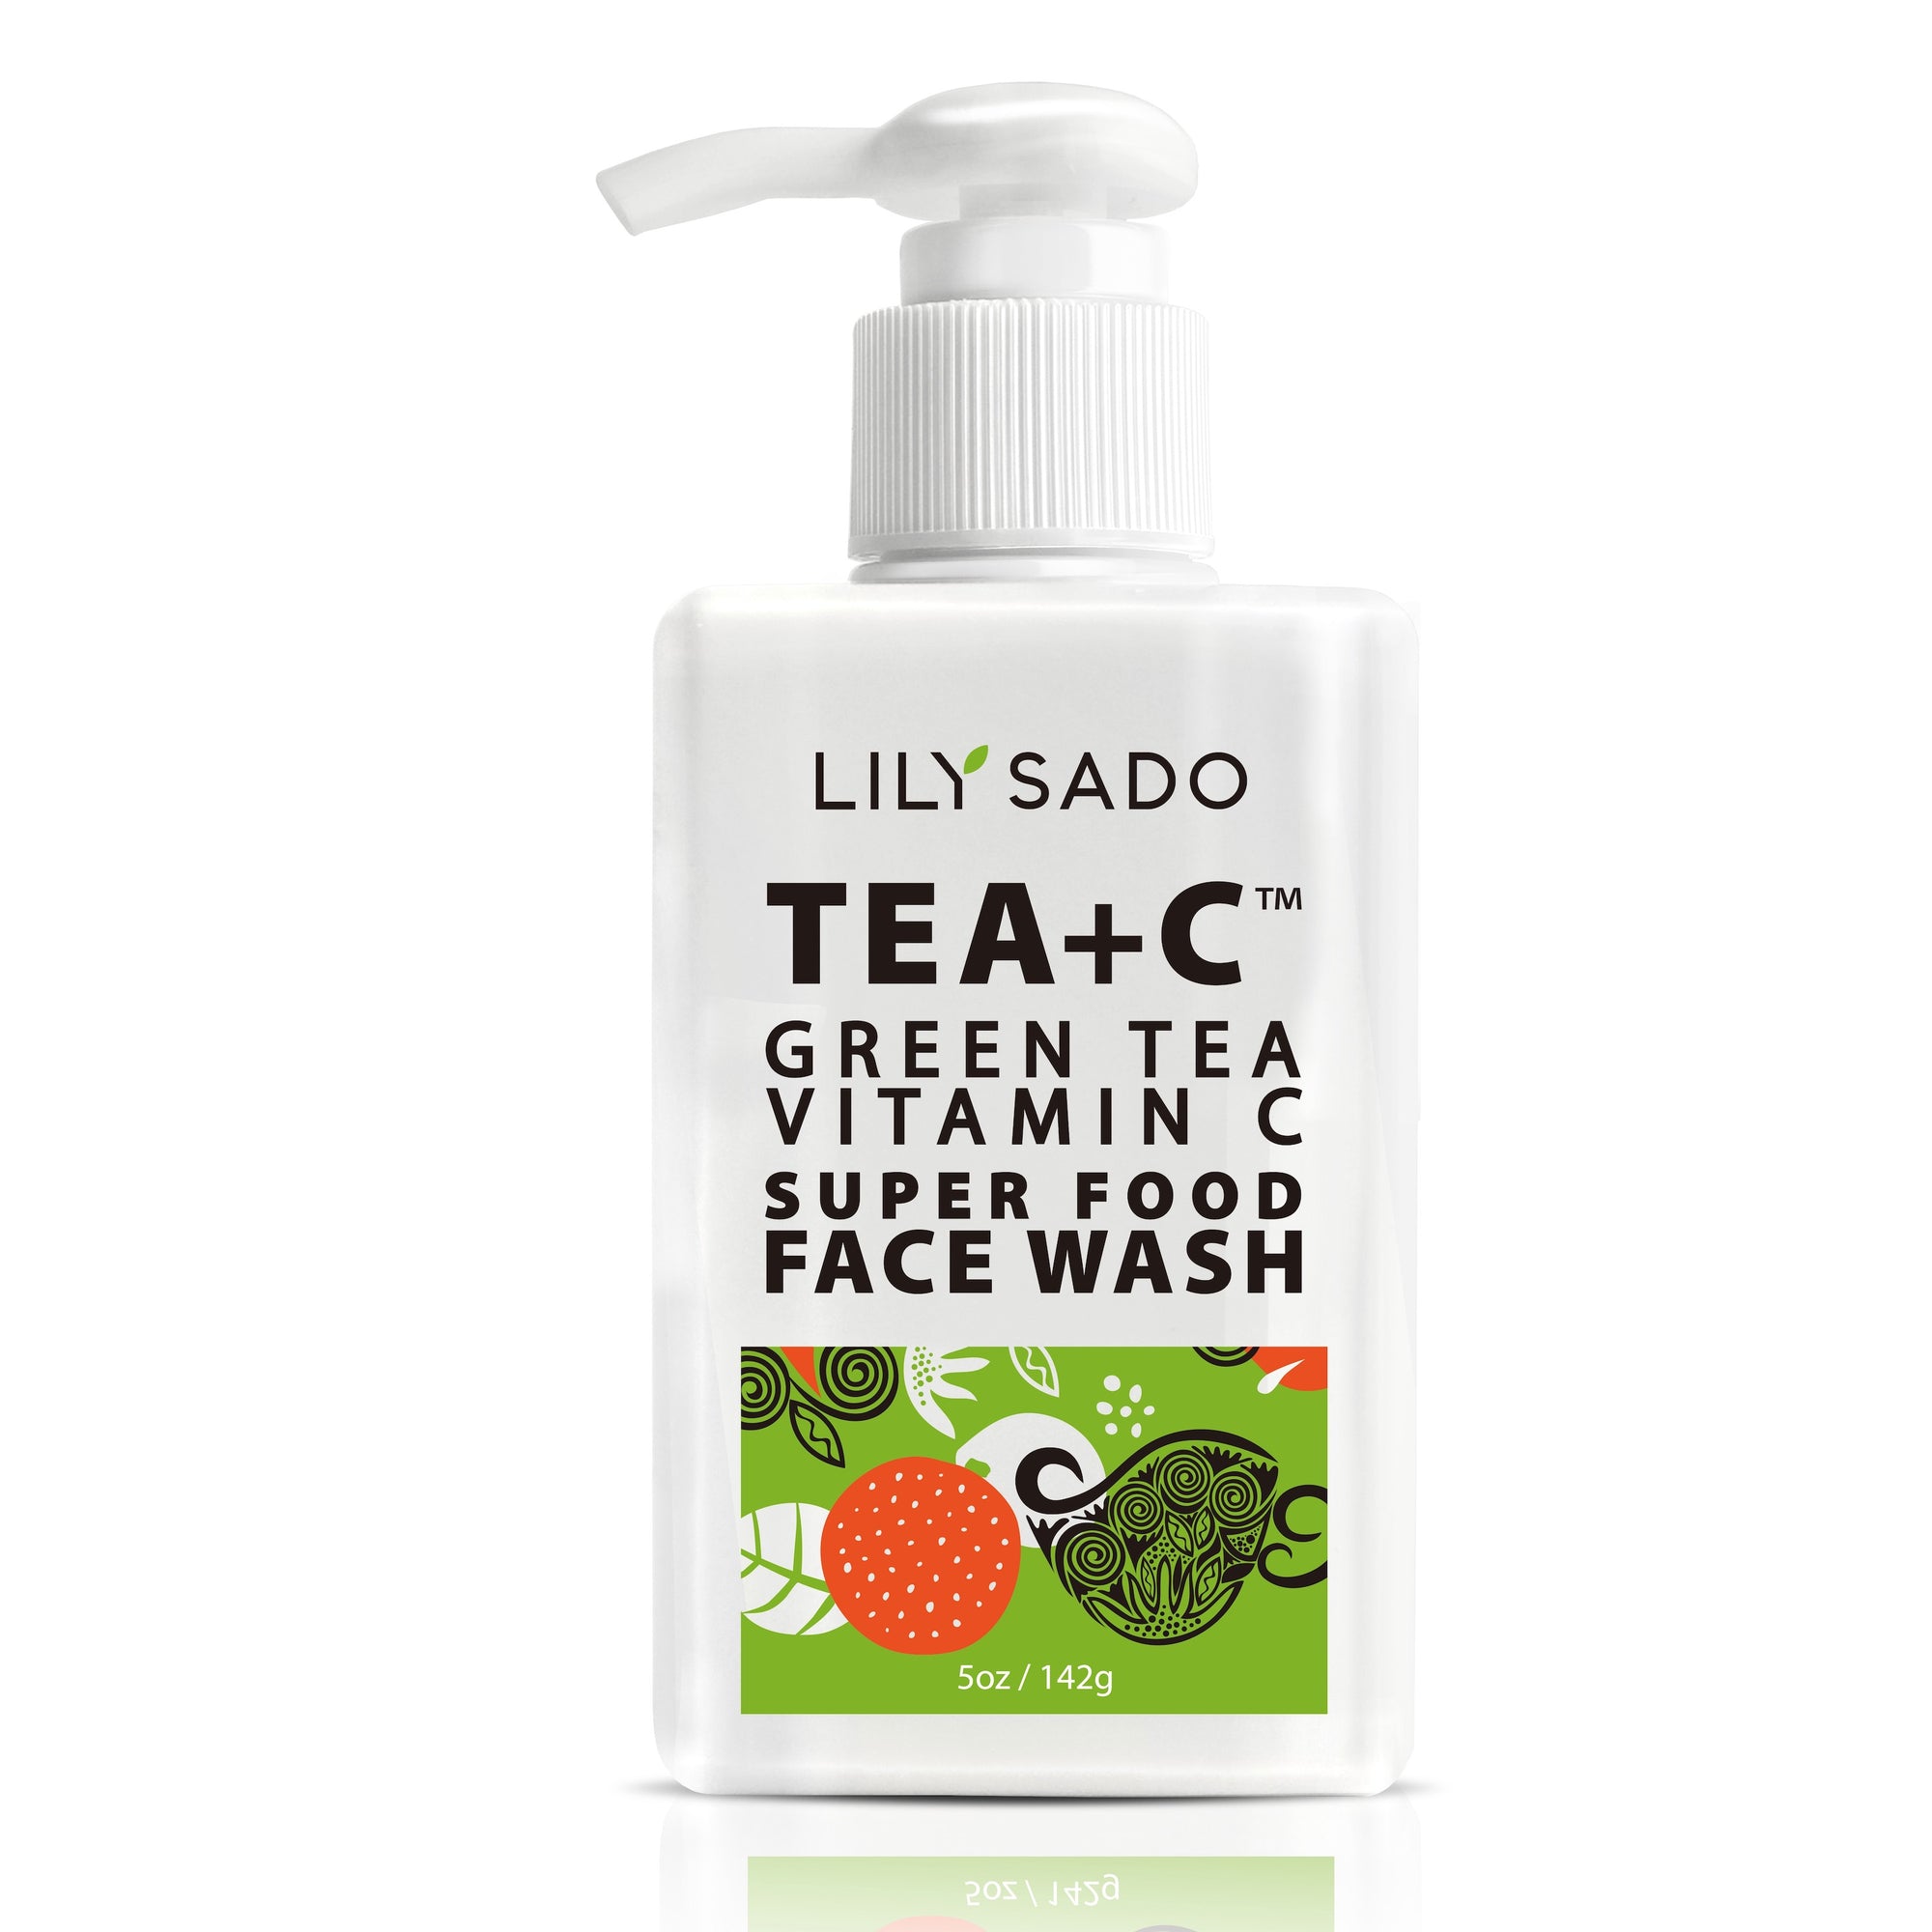 LILY SADO TEA+C Green Tea Vitamin C Face Wash